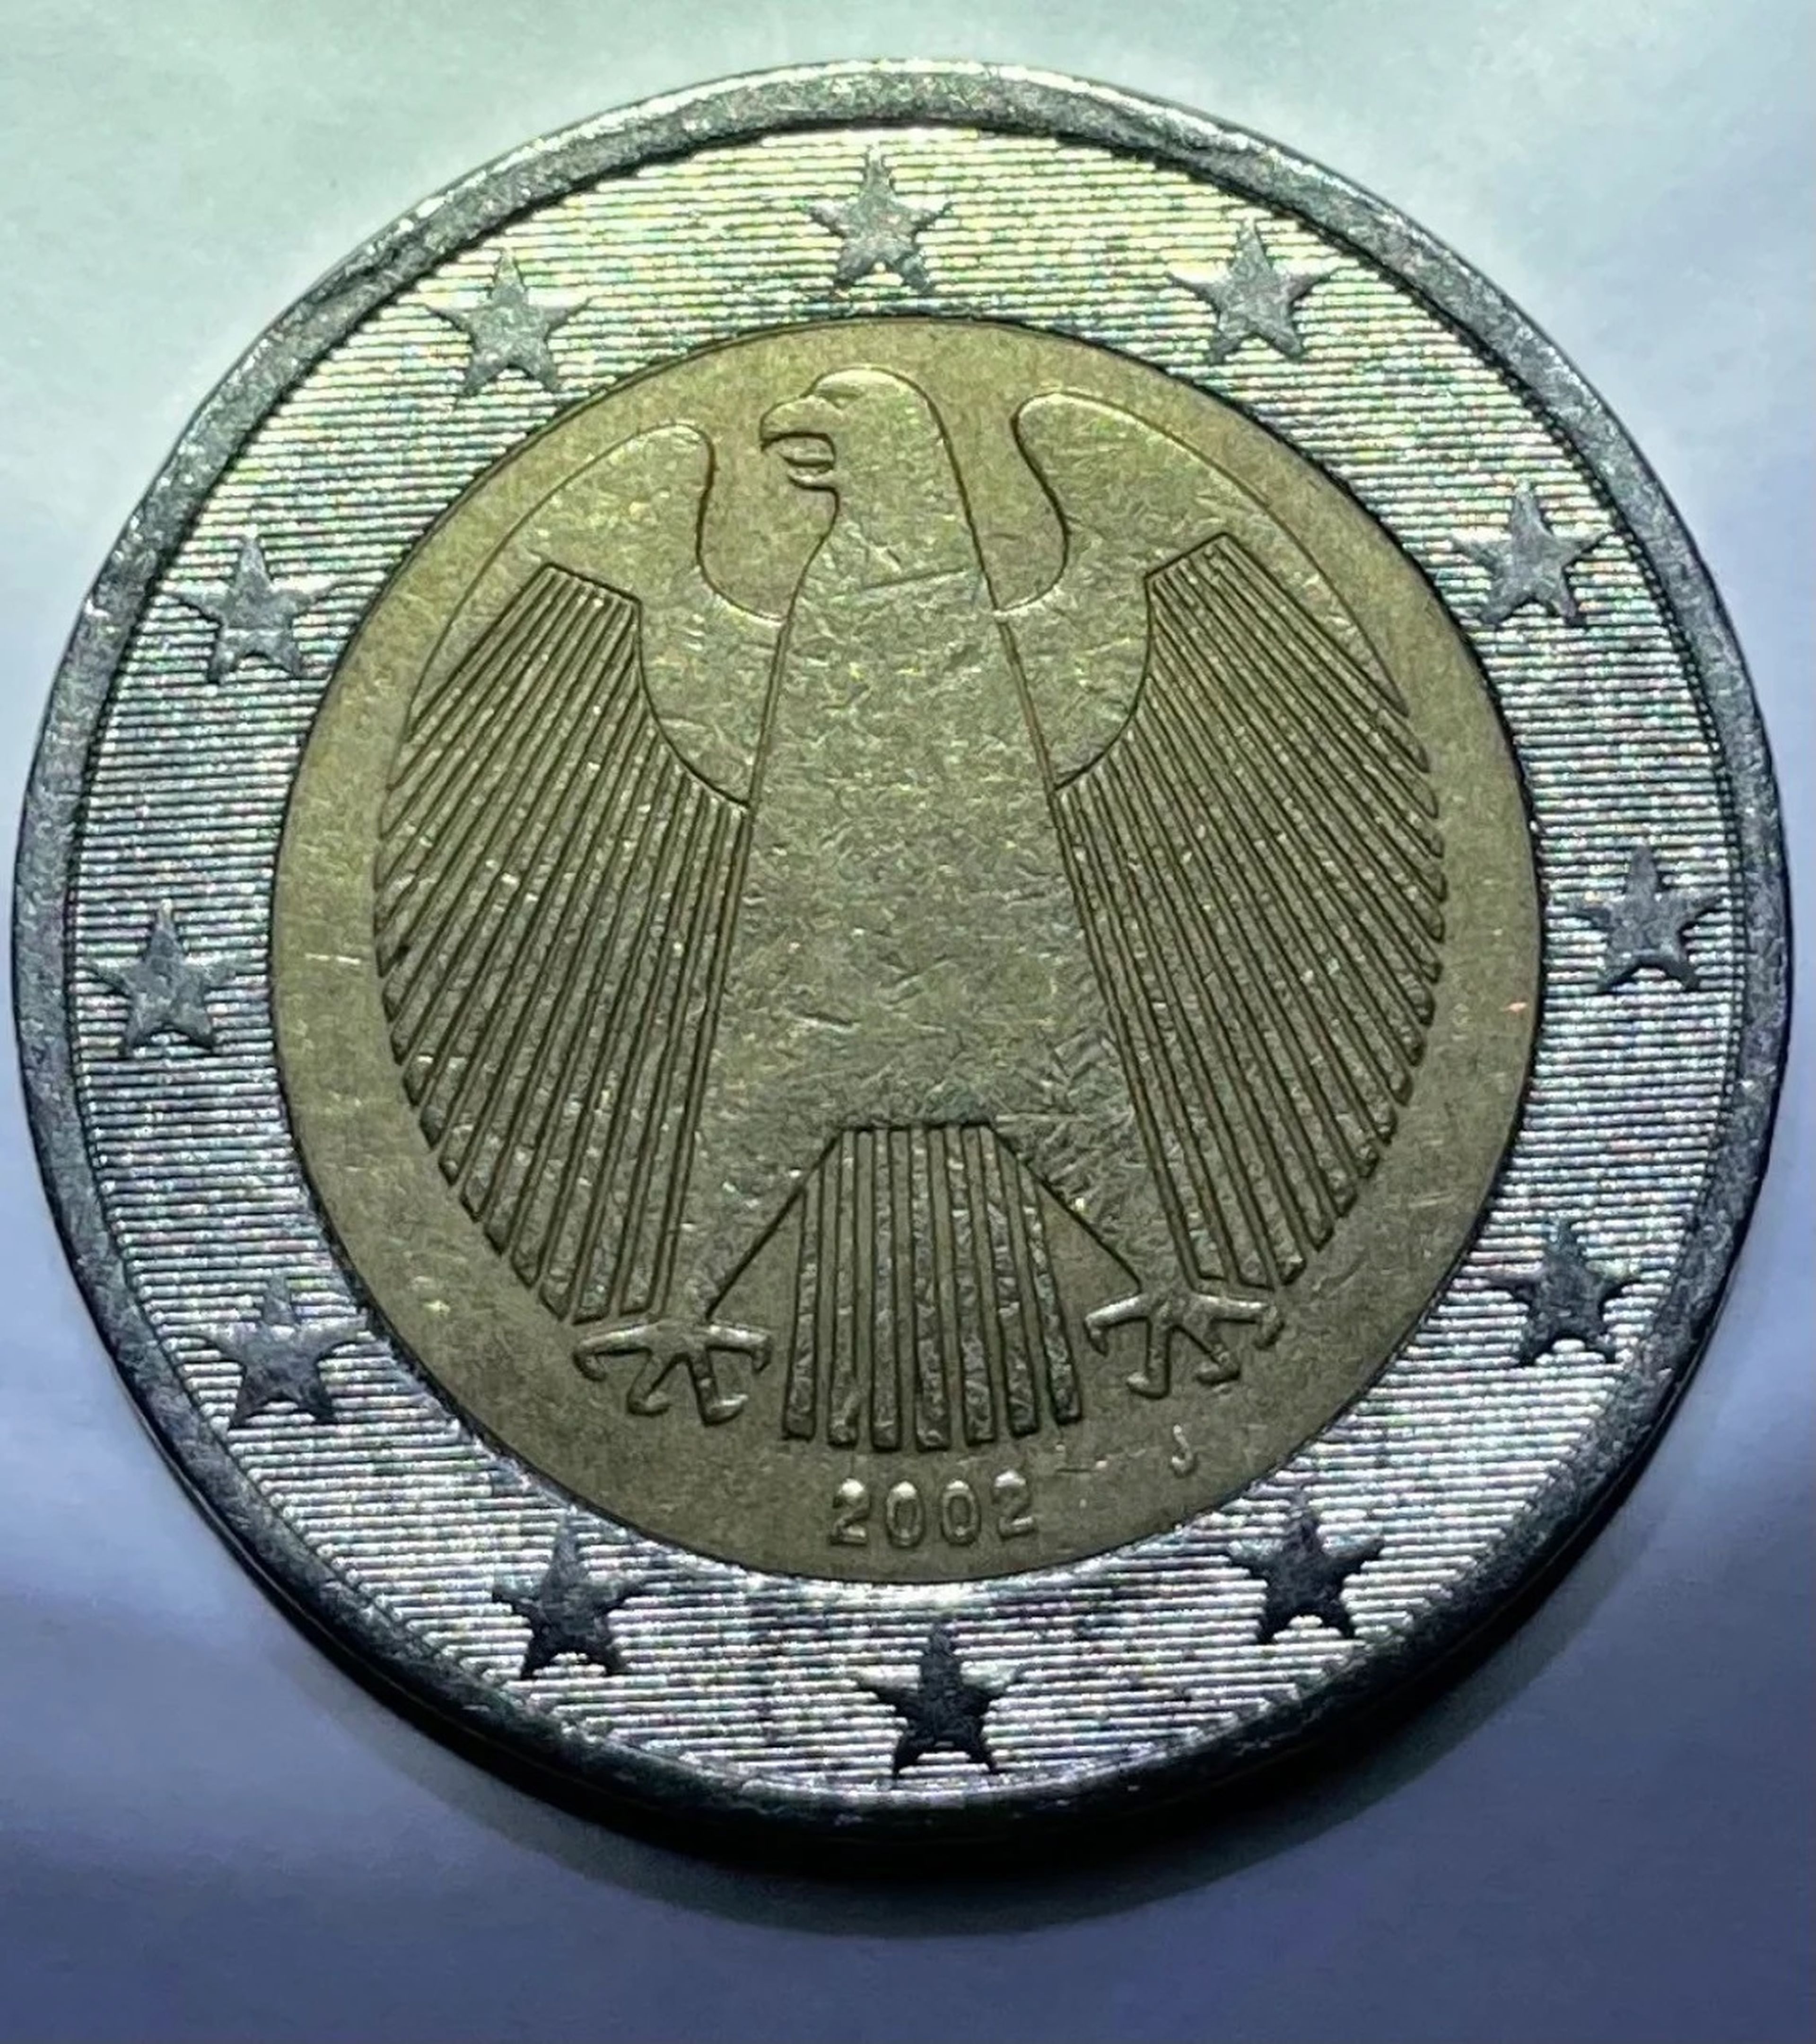 Moneda de 2 euros de Alemania